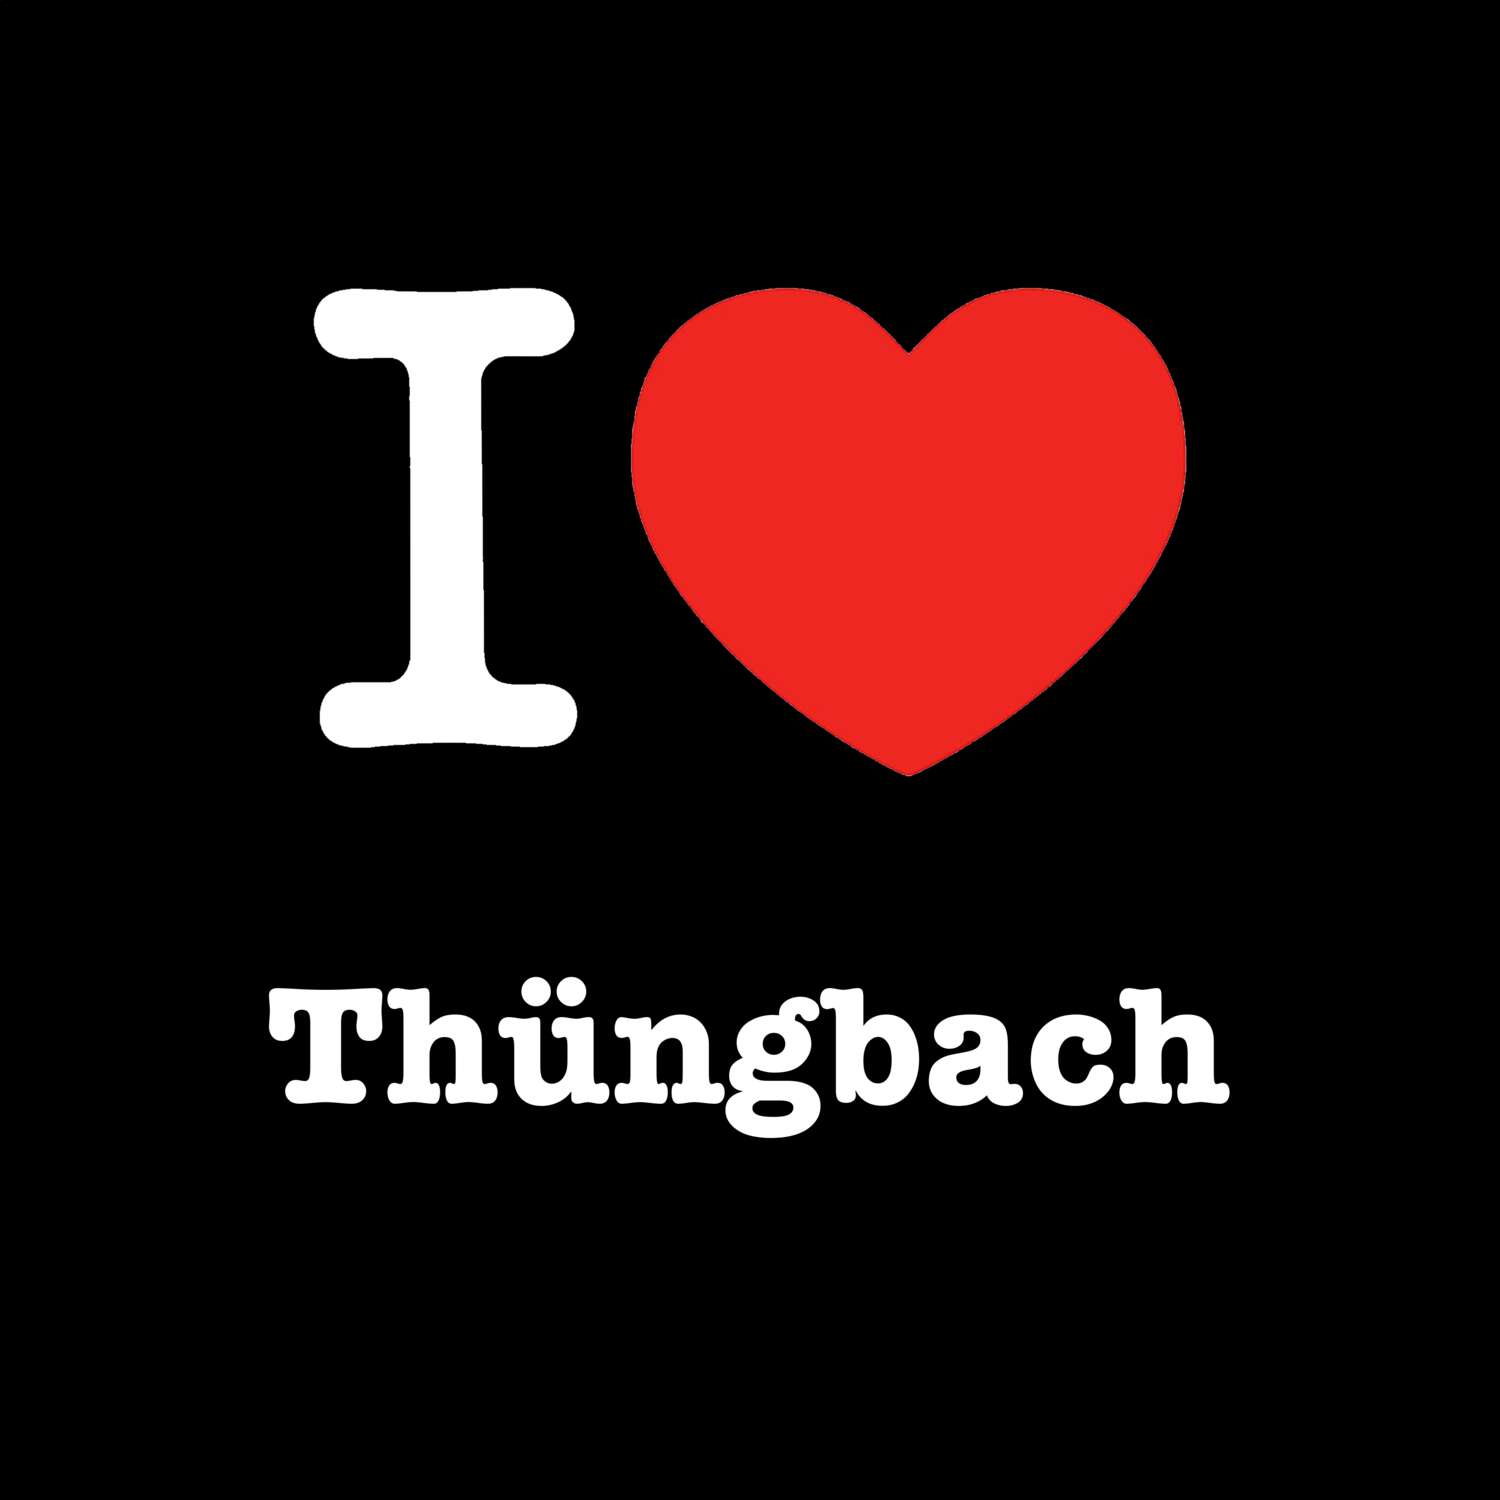 Thüngbach T-Shirt »I love«